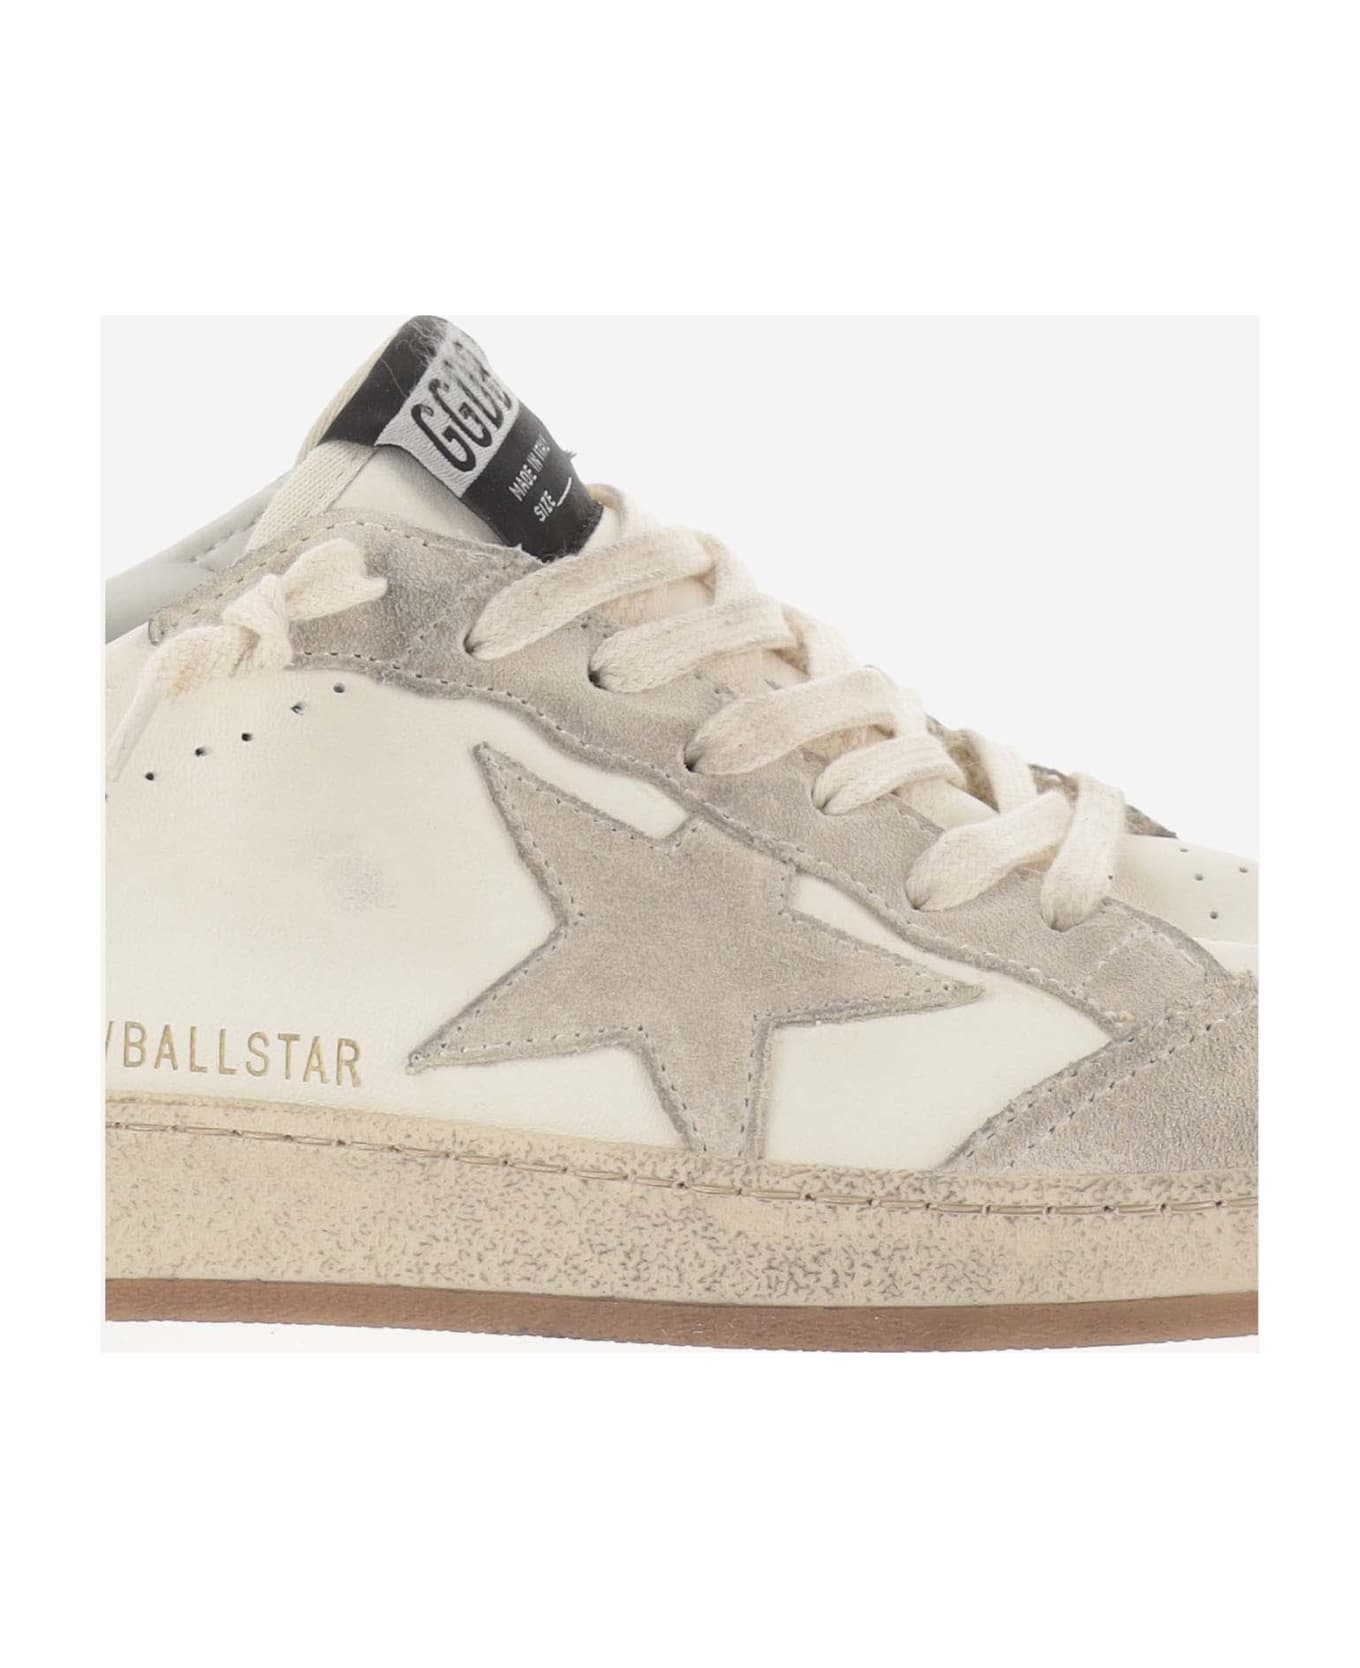 Golden Goose Ball Star Sneakers - White/seedpearl/silver スニーカー